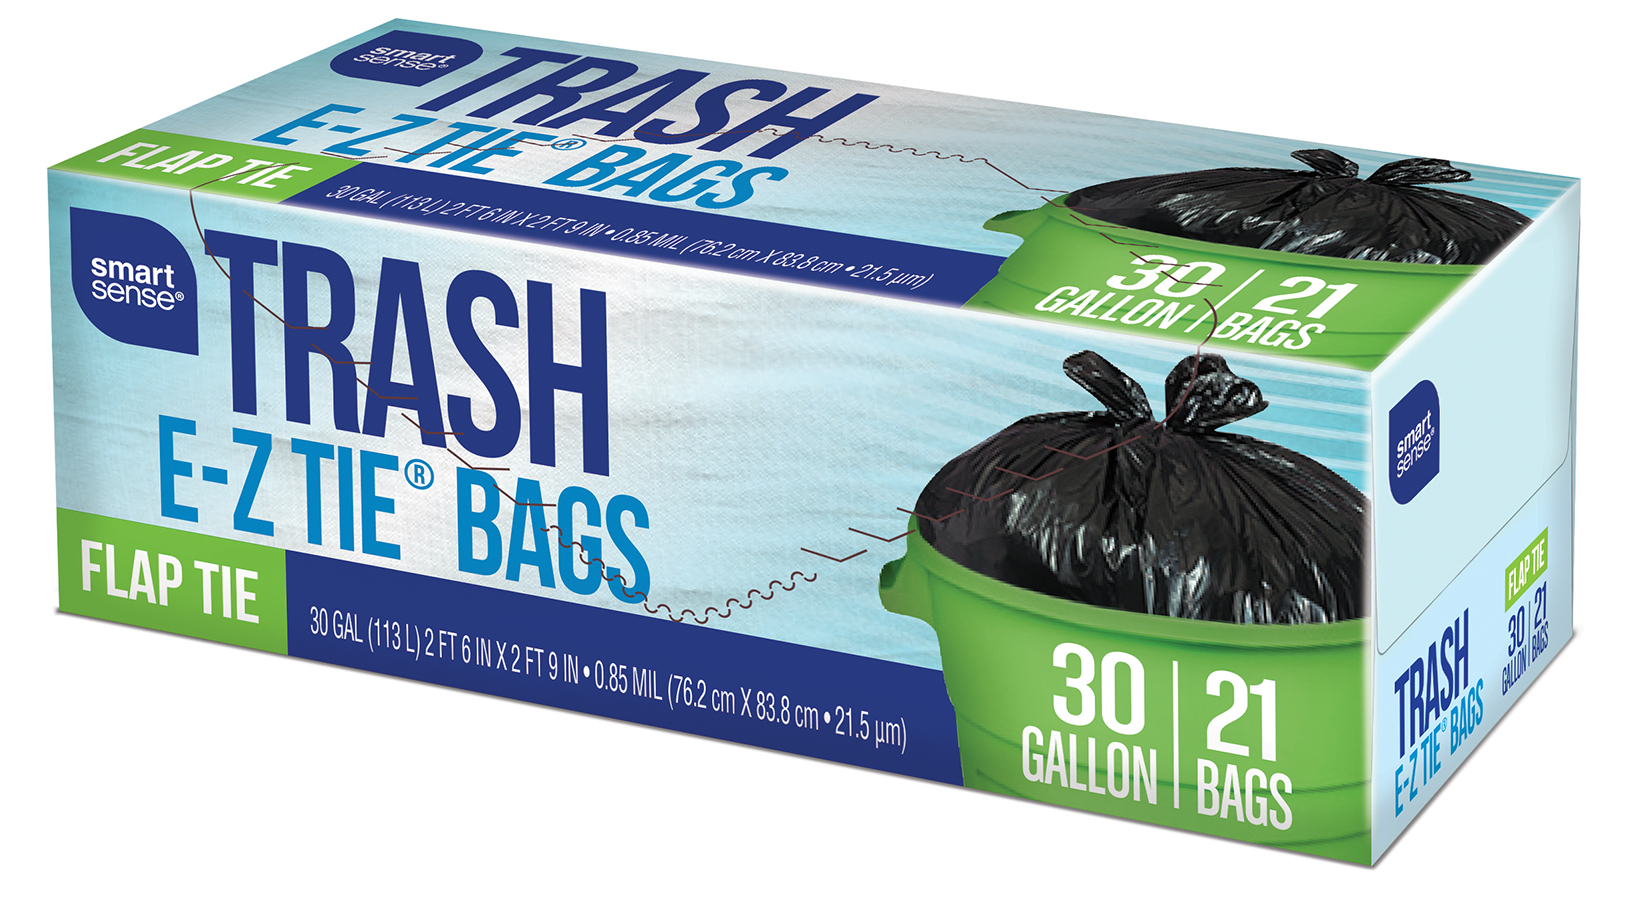 Smart Sense Trash Bag Flap Tie, 30 Gal, 21 Ct.